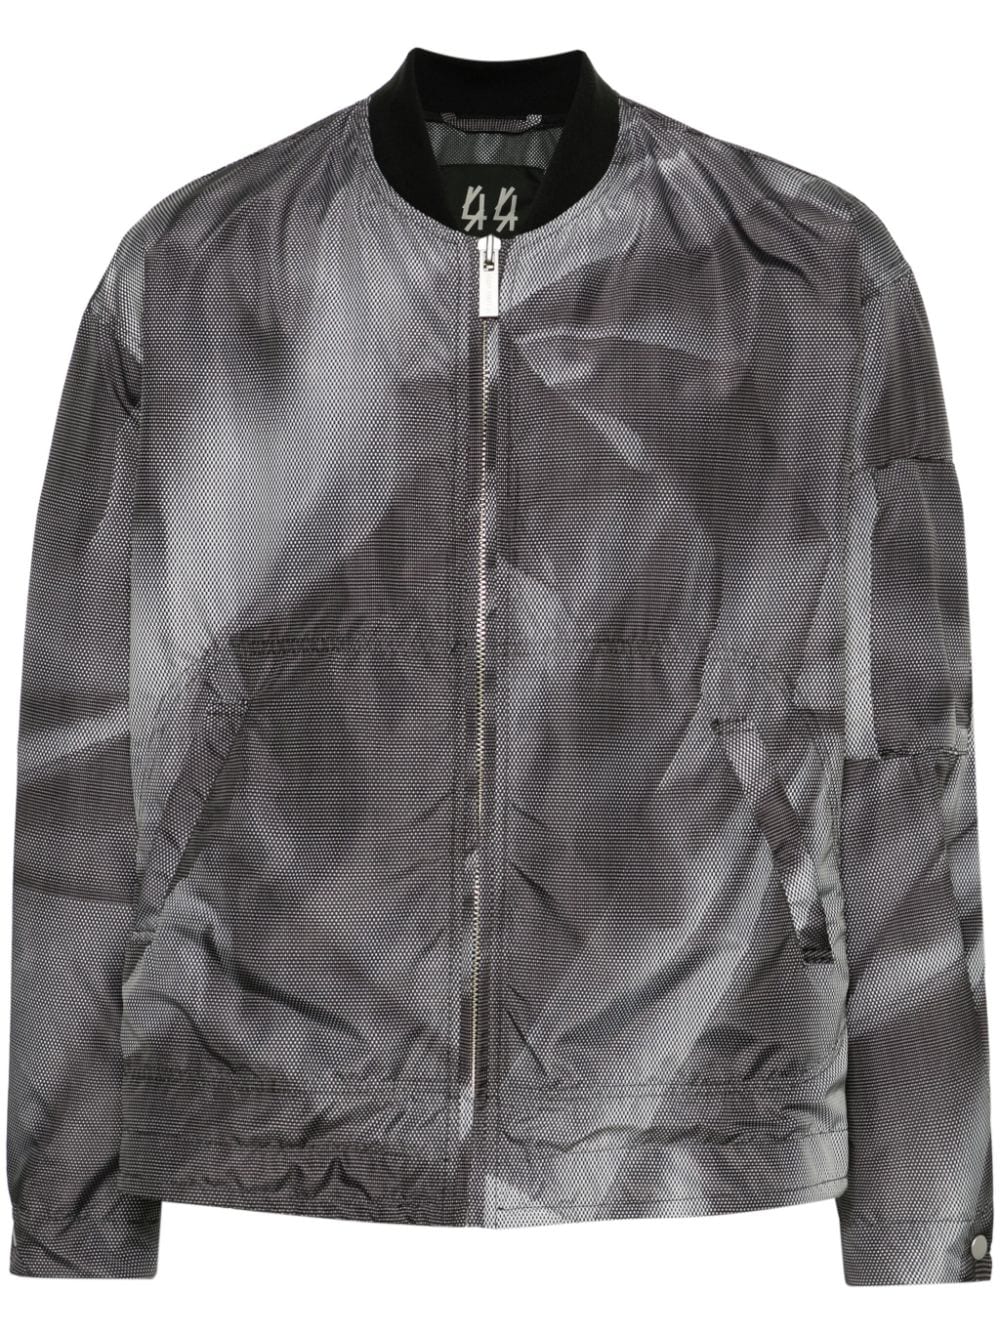 44 LABEL GROUP Crinkle graphic-print bomber jacket - Nero